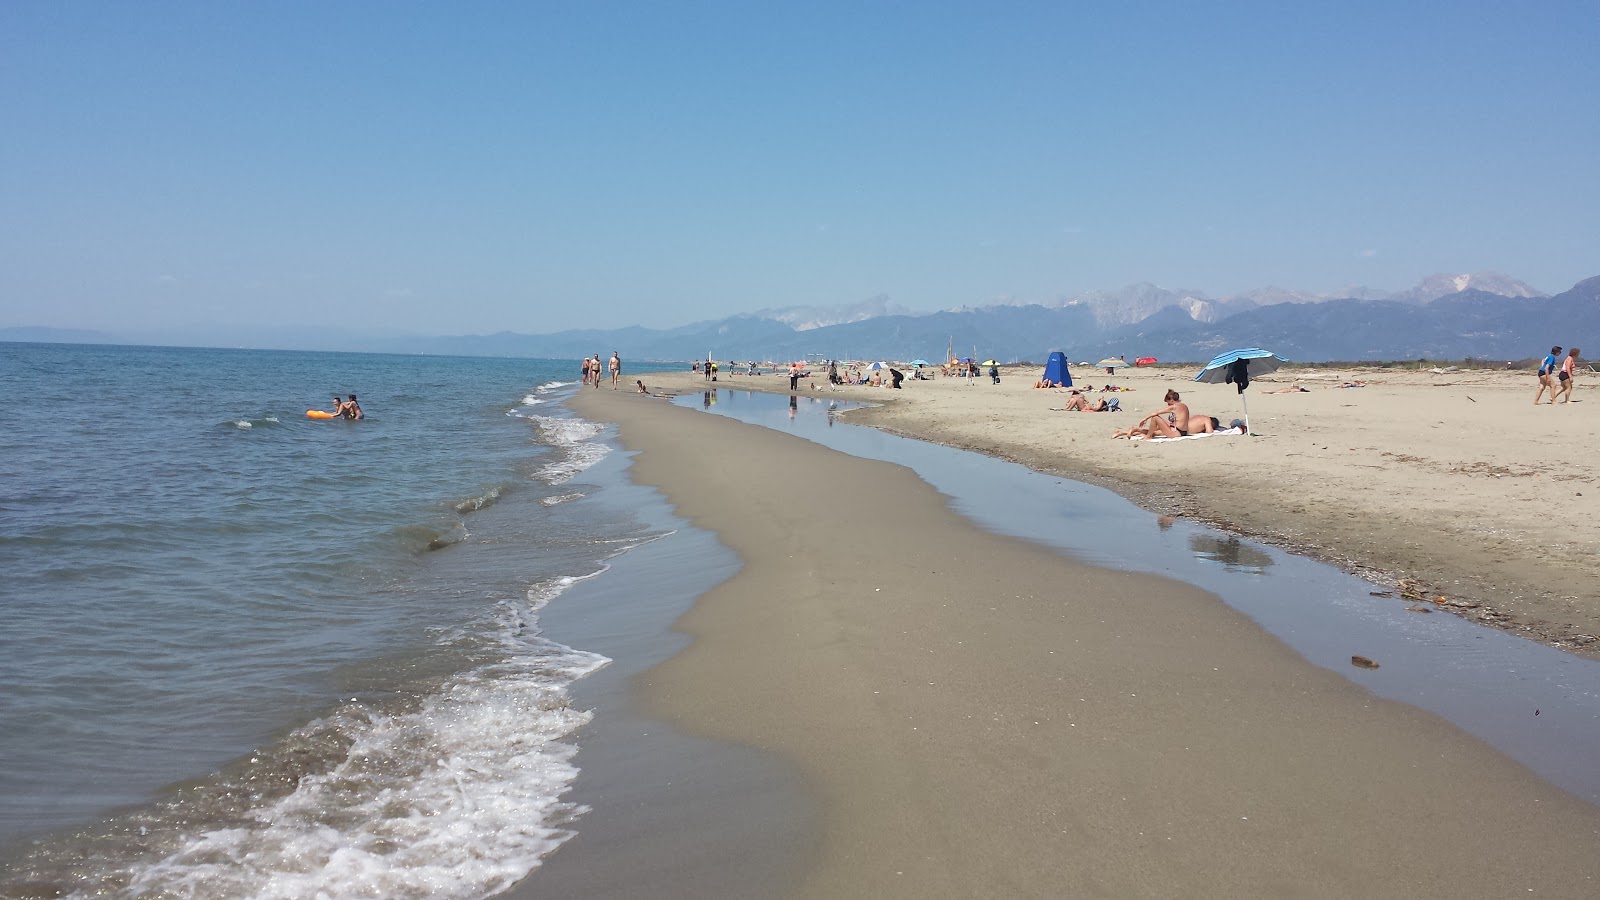 Fotografija Spiaggia della Lecciona z modra voda površino